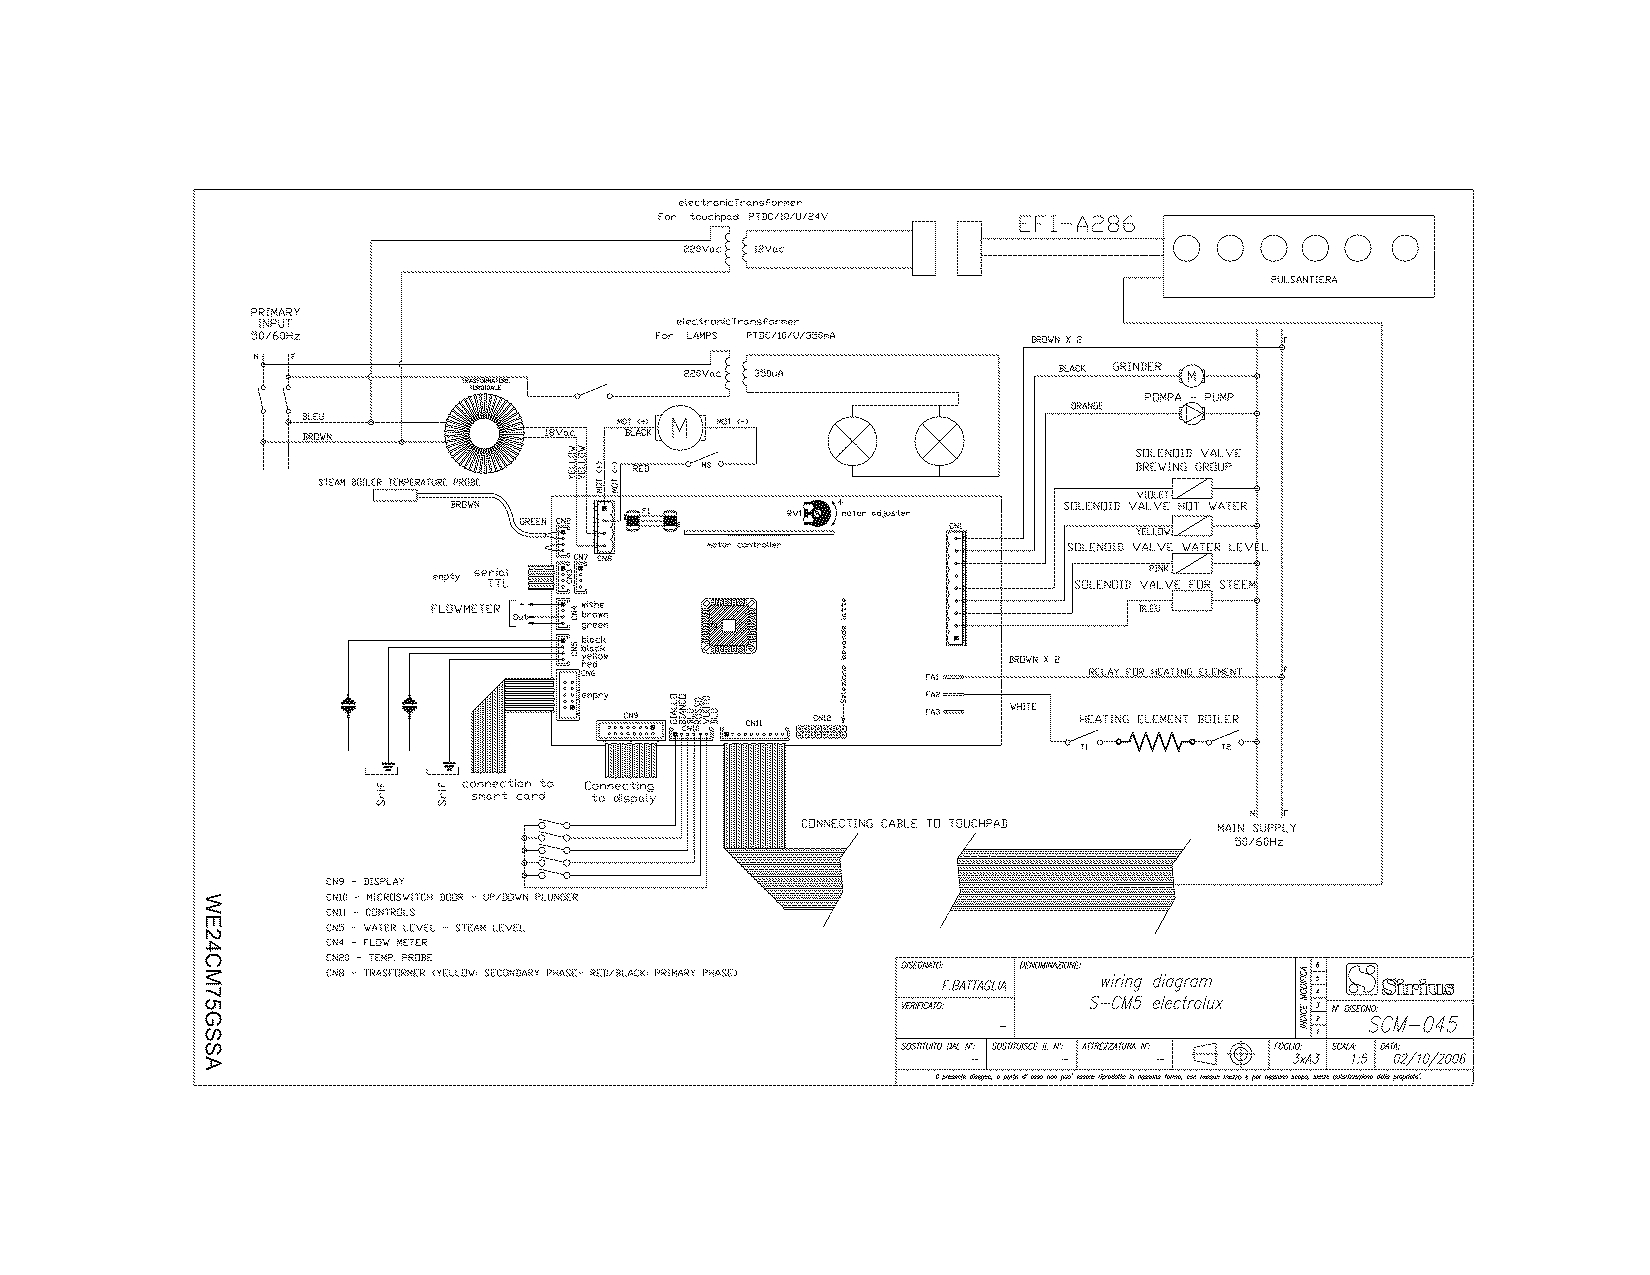 Circuit Diagram Maker Coffee Maker Schematic Diagram Wiring Diagram Work